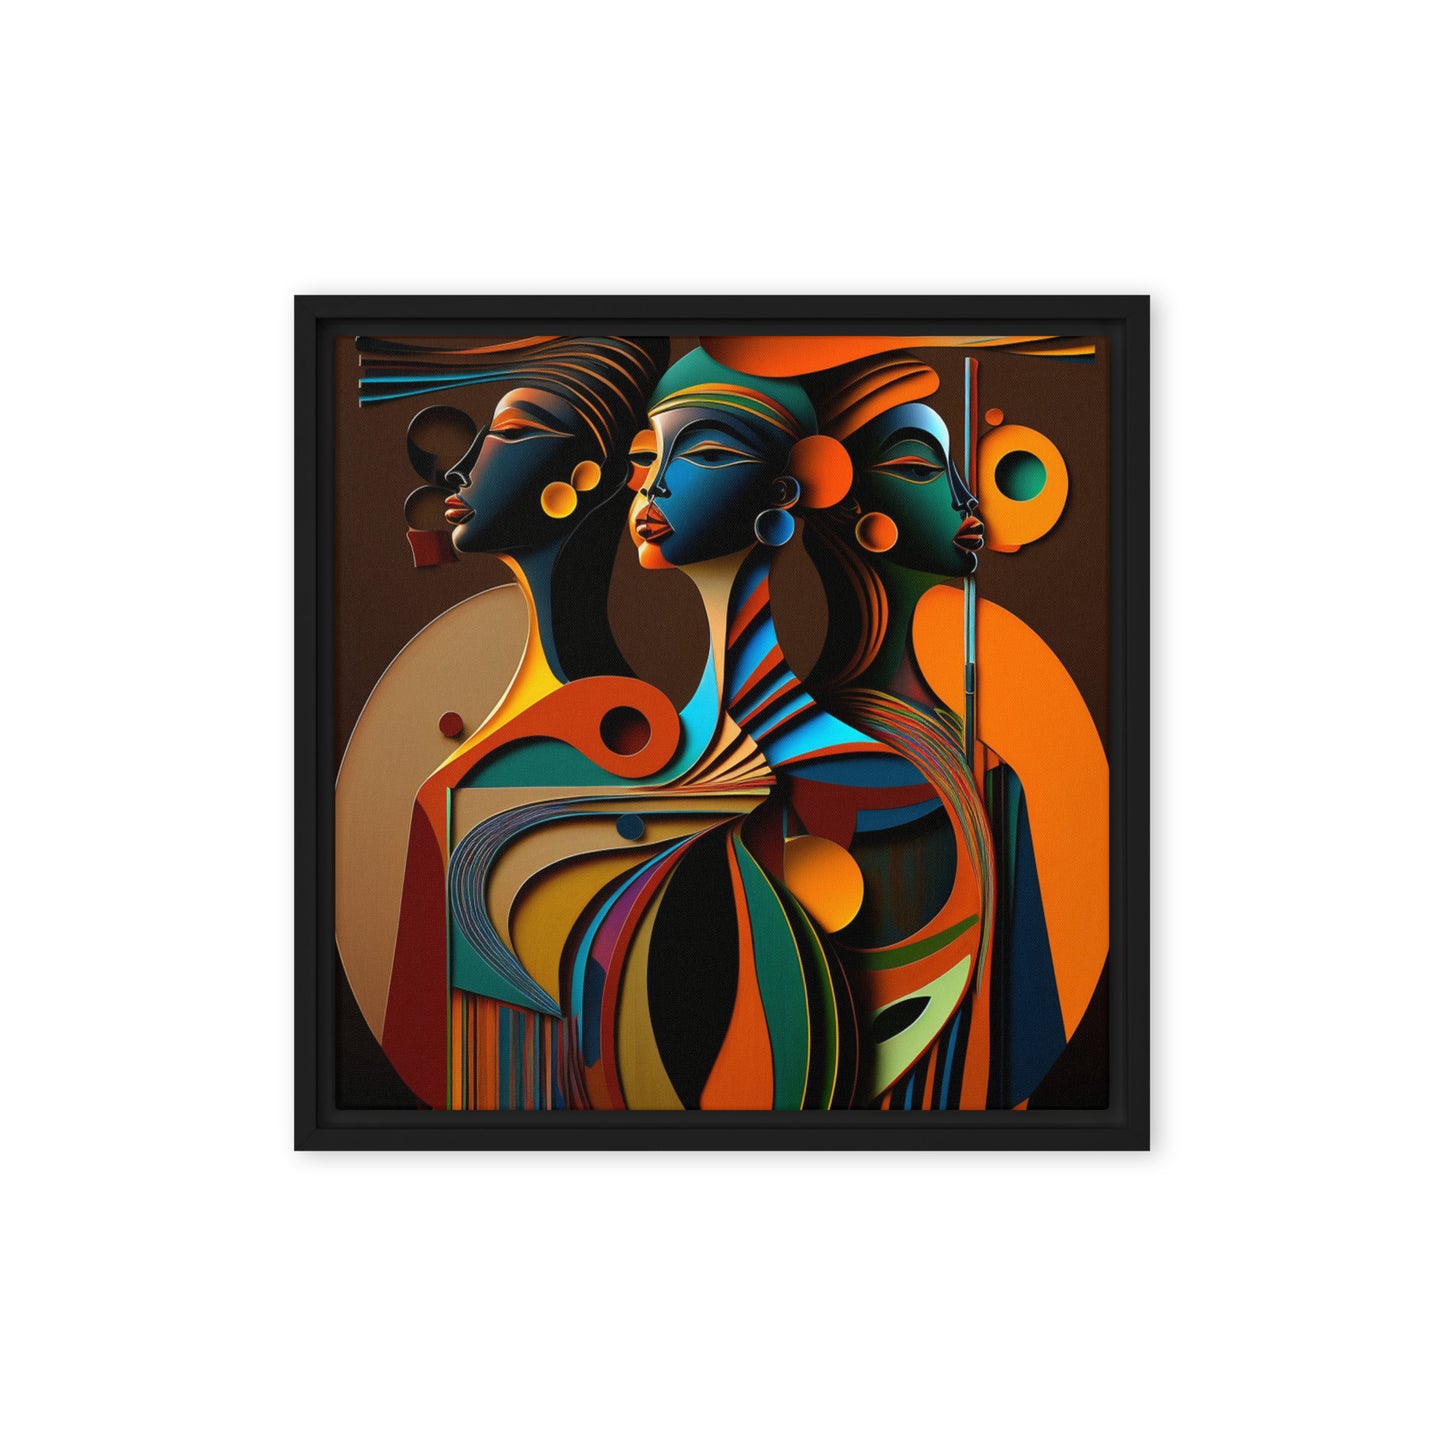 'HARMONIZE' abstract African design: Framed canvas art